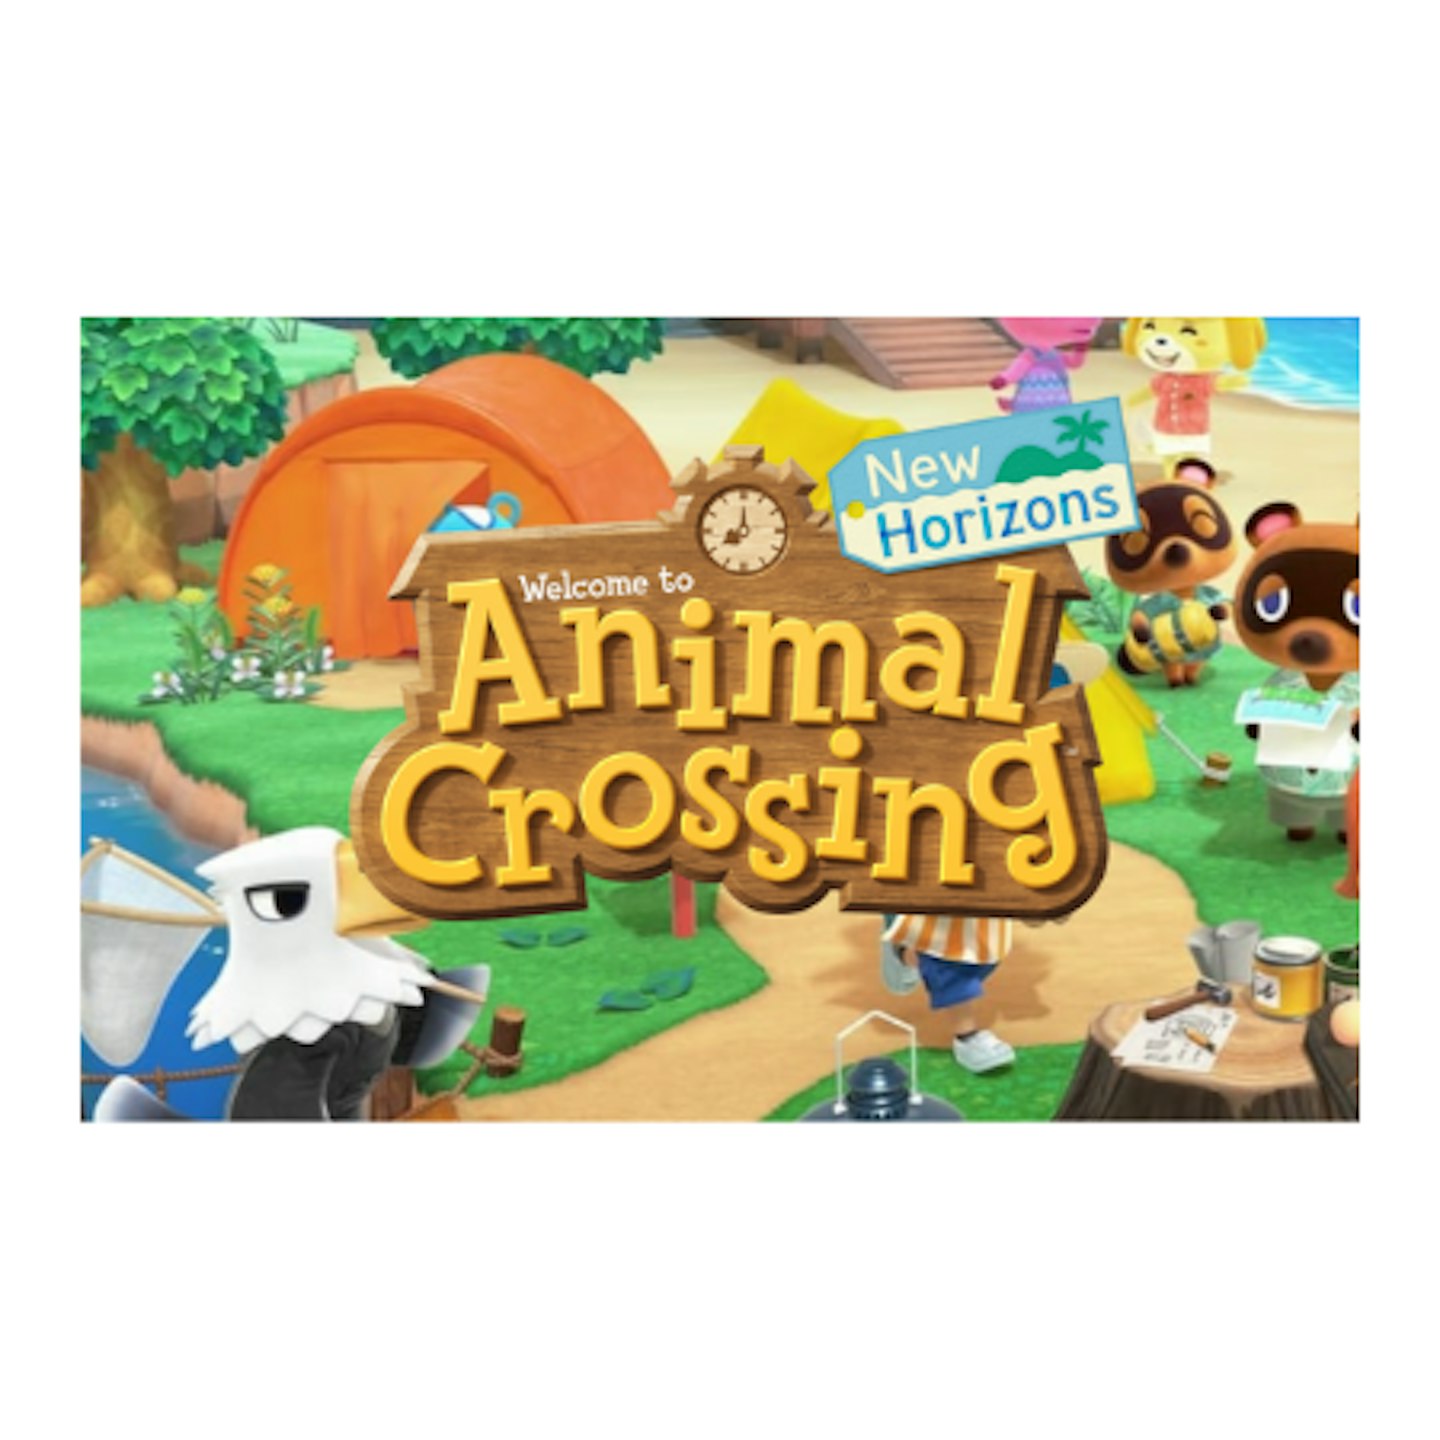 Animal crossing: new horizons